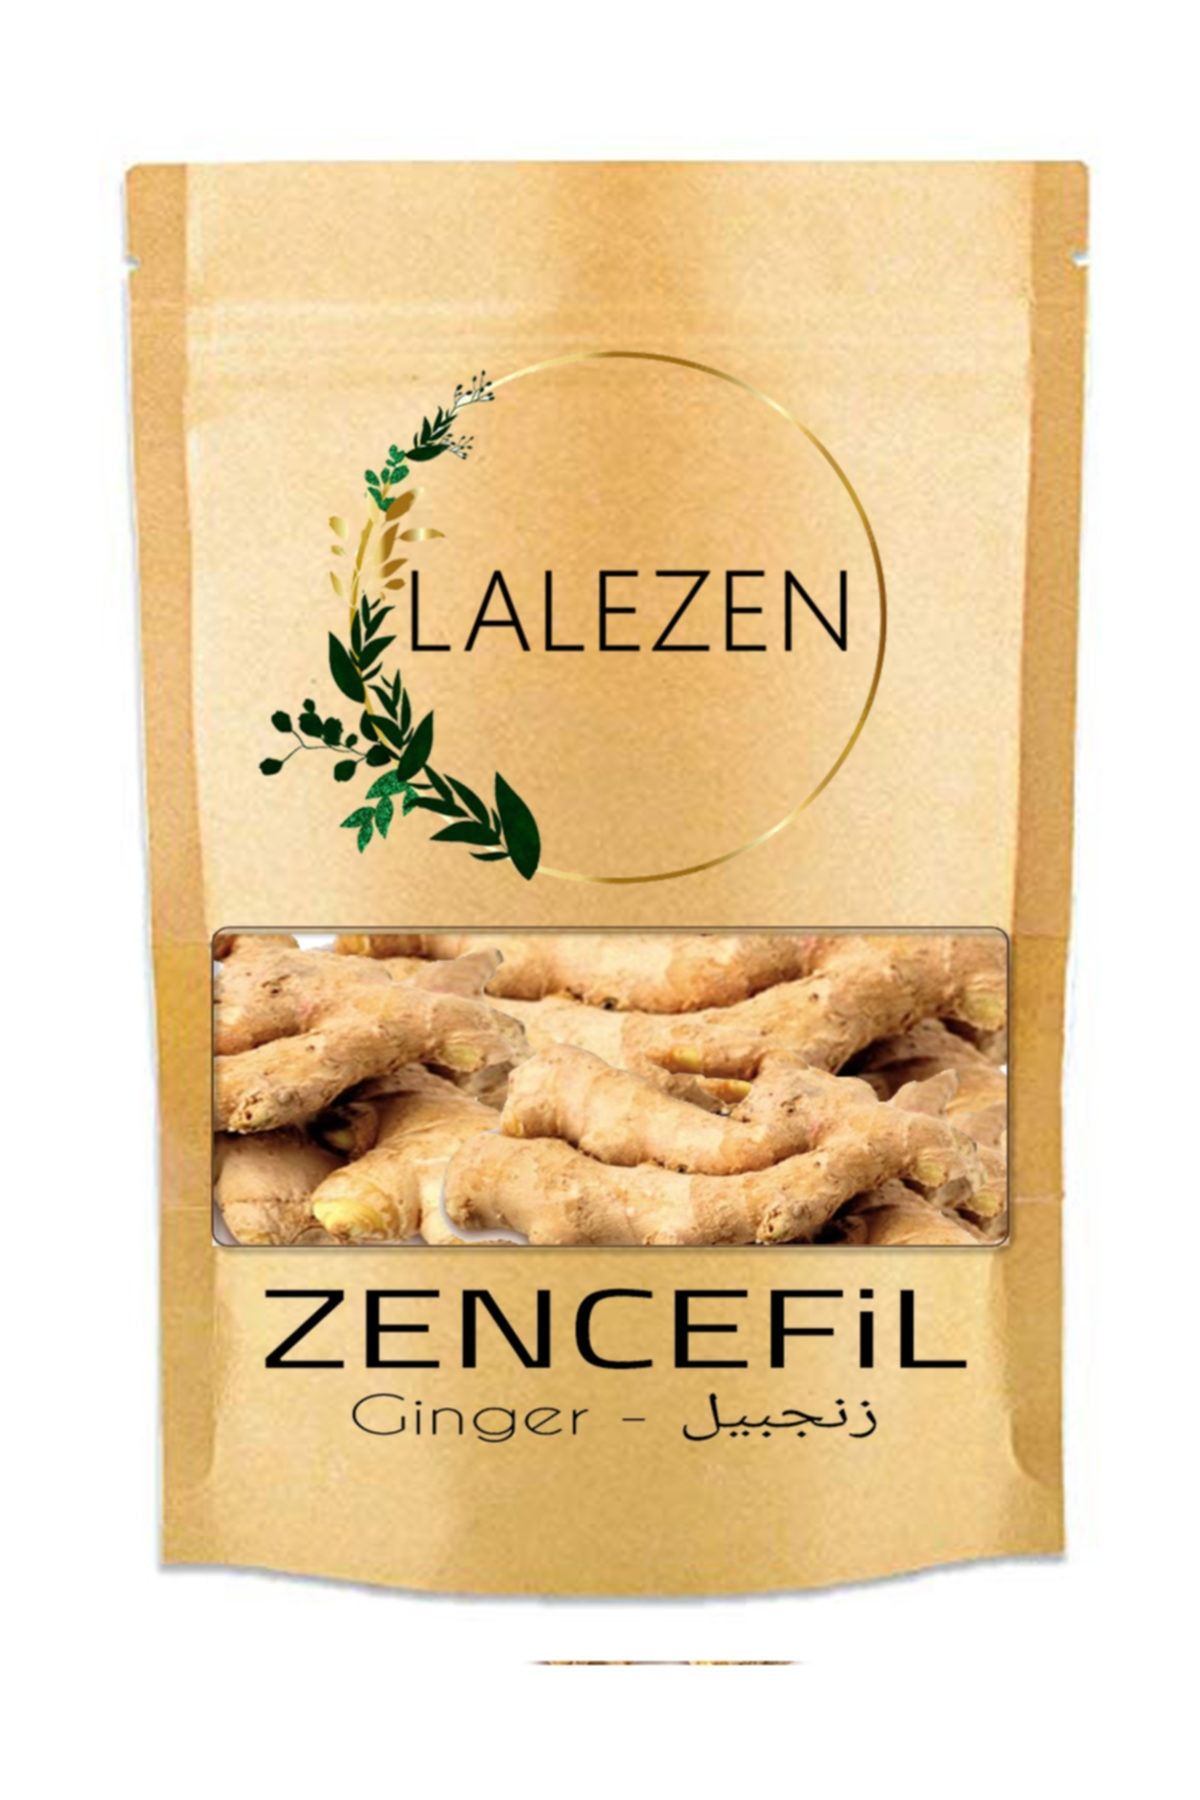 LALEZEN Taze Zencefil 100 G - Ginger